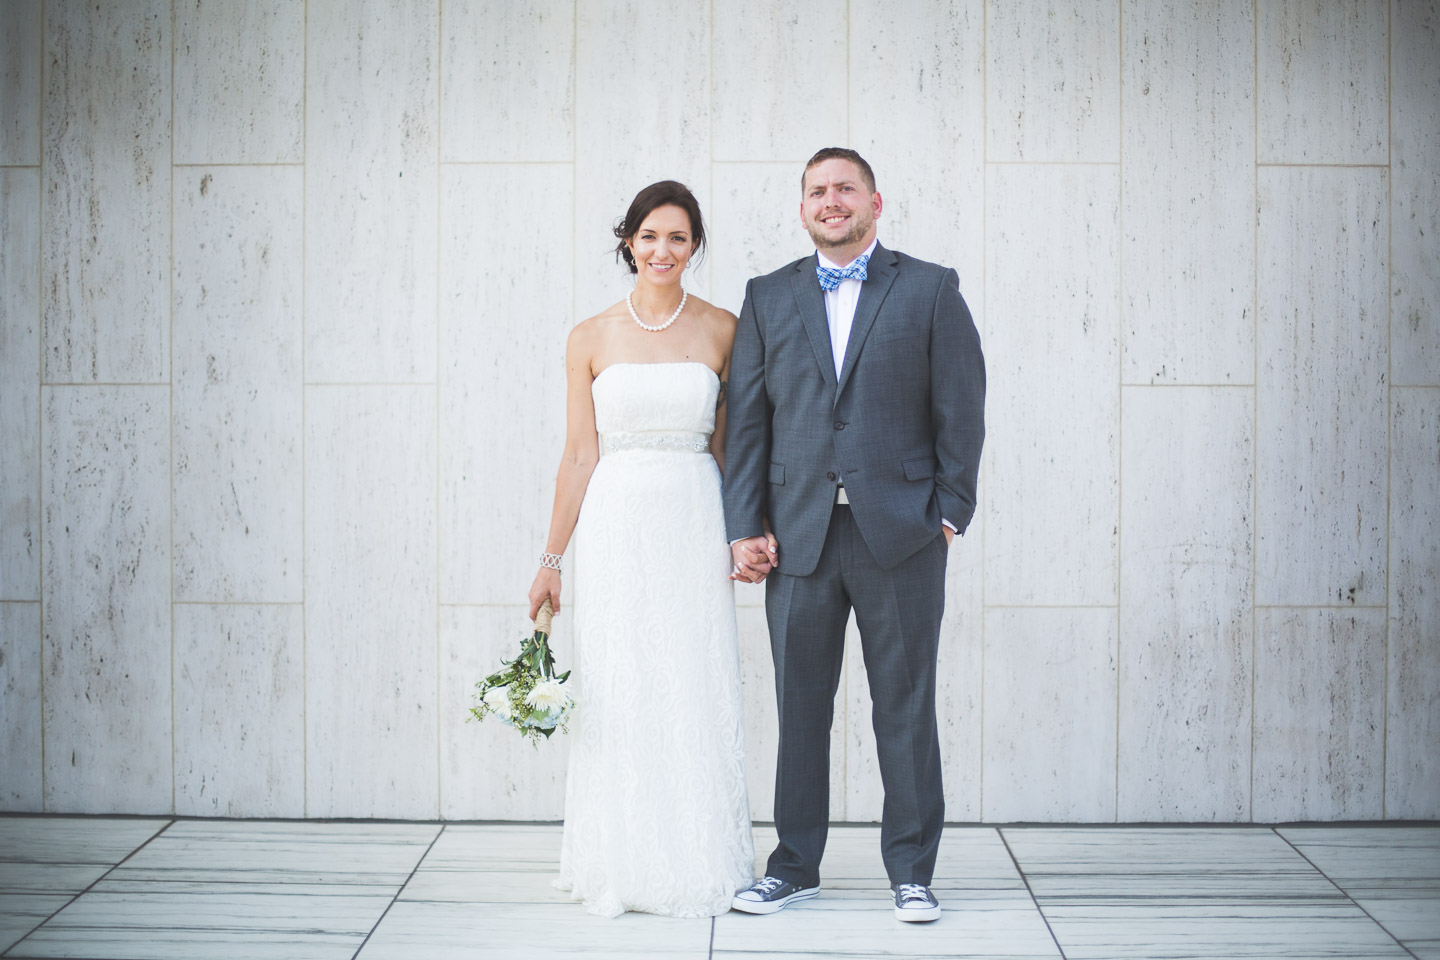 Detroit-Michigan-Wedding-Photographer-Photography-Bride-Groom-Couple-Pearls-Bowtie-Converse